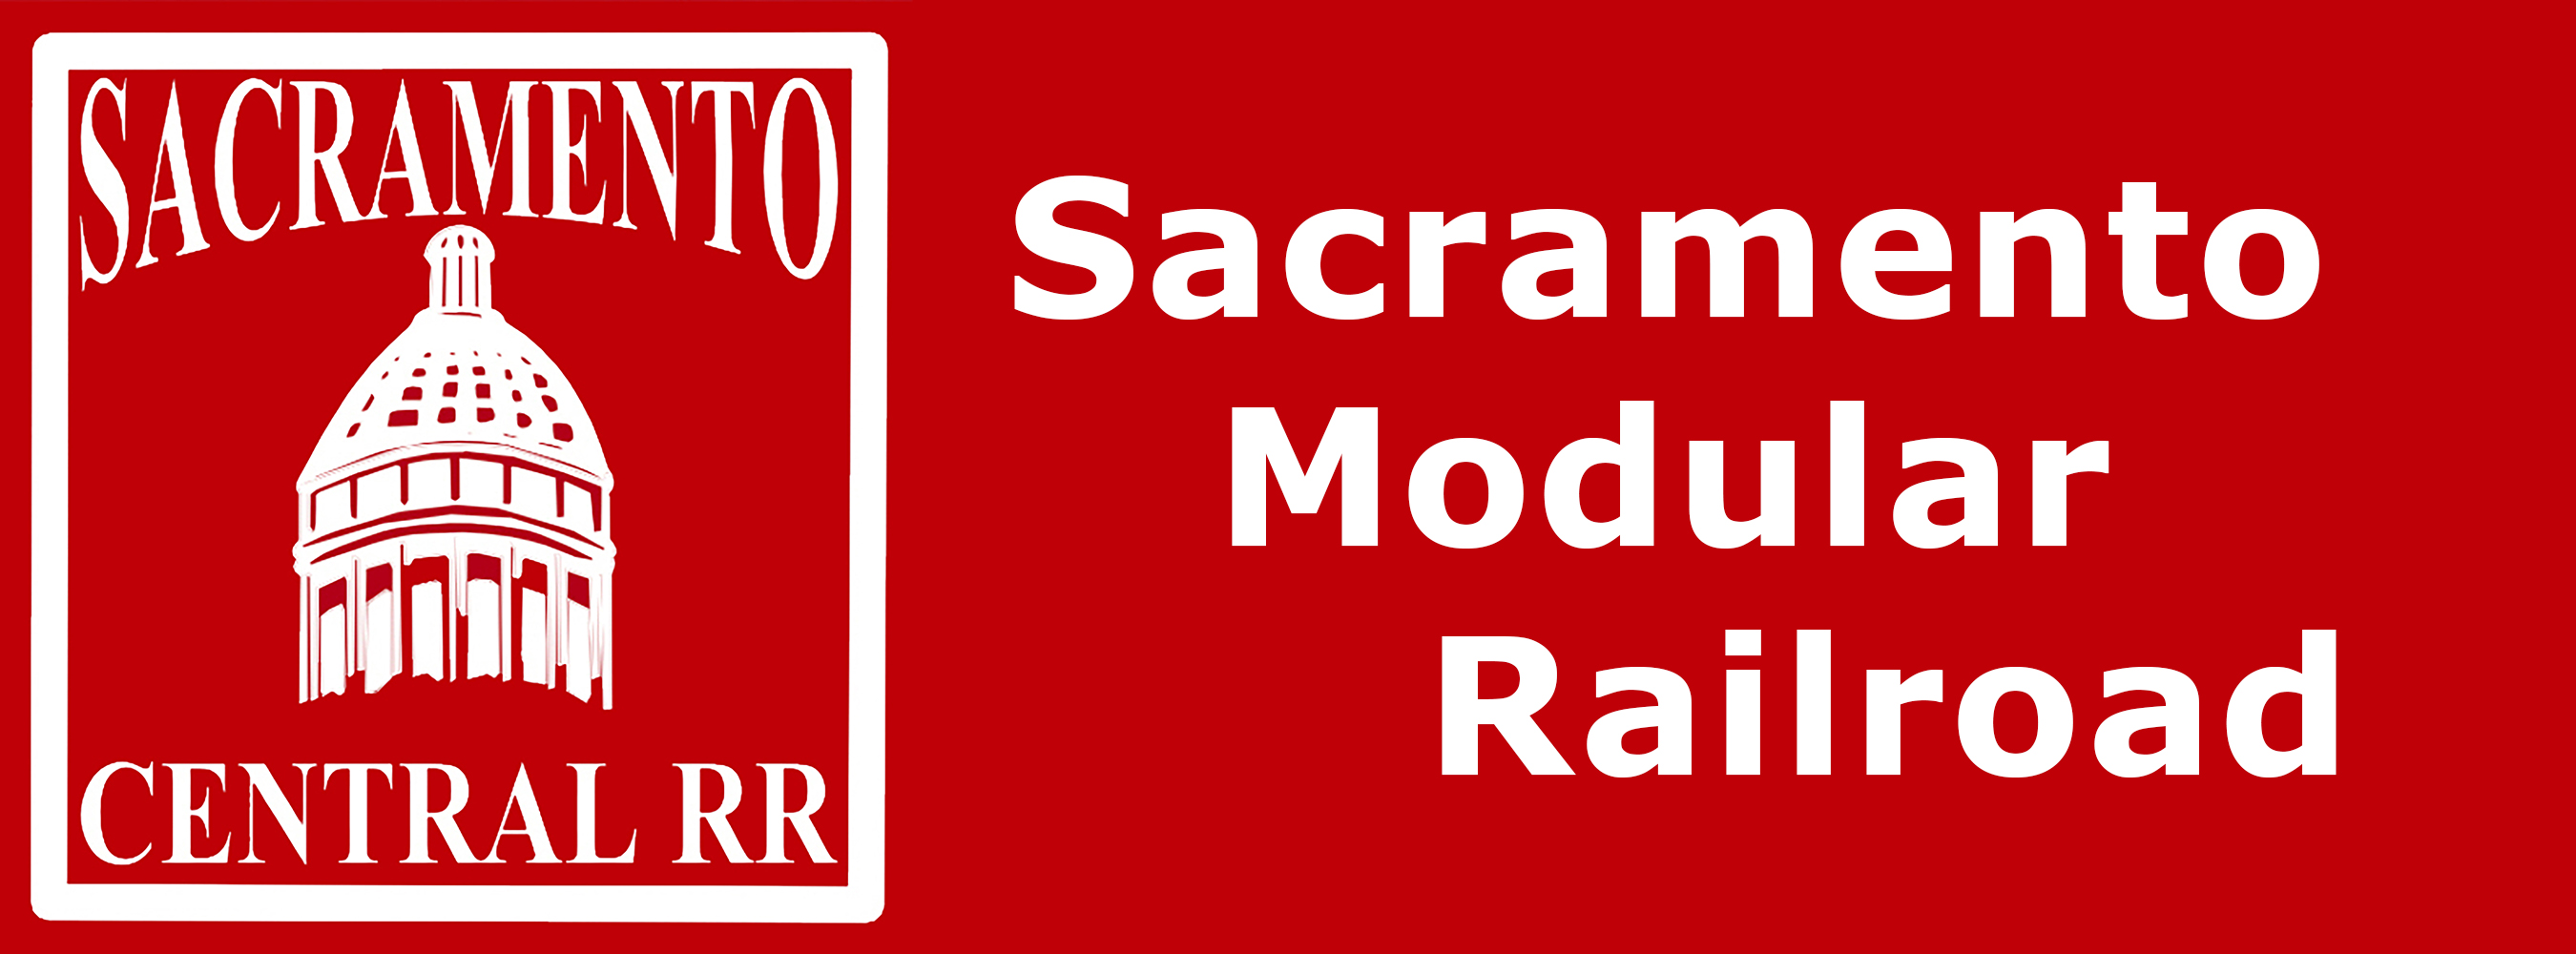 Sacramento Modular Railroad